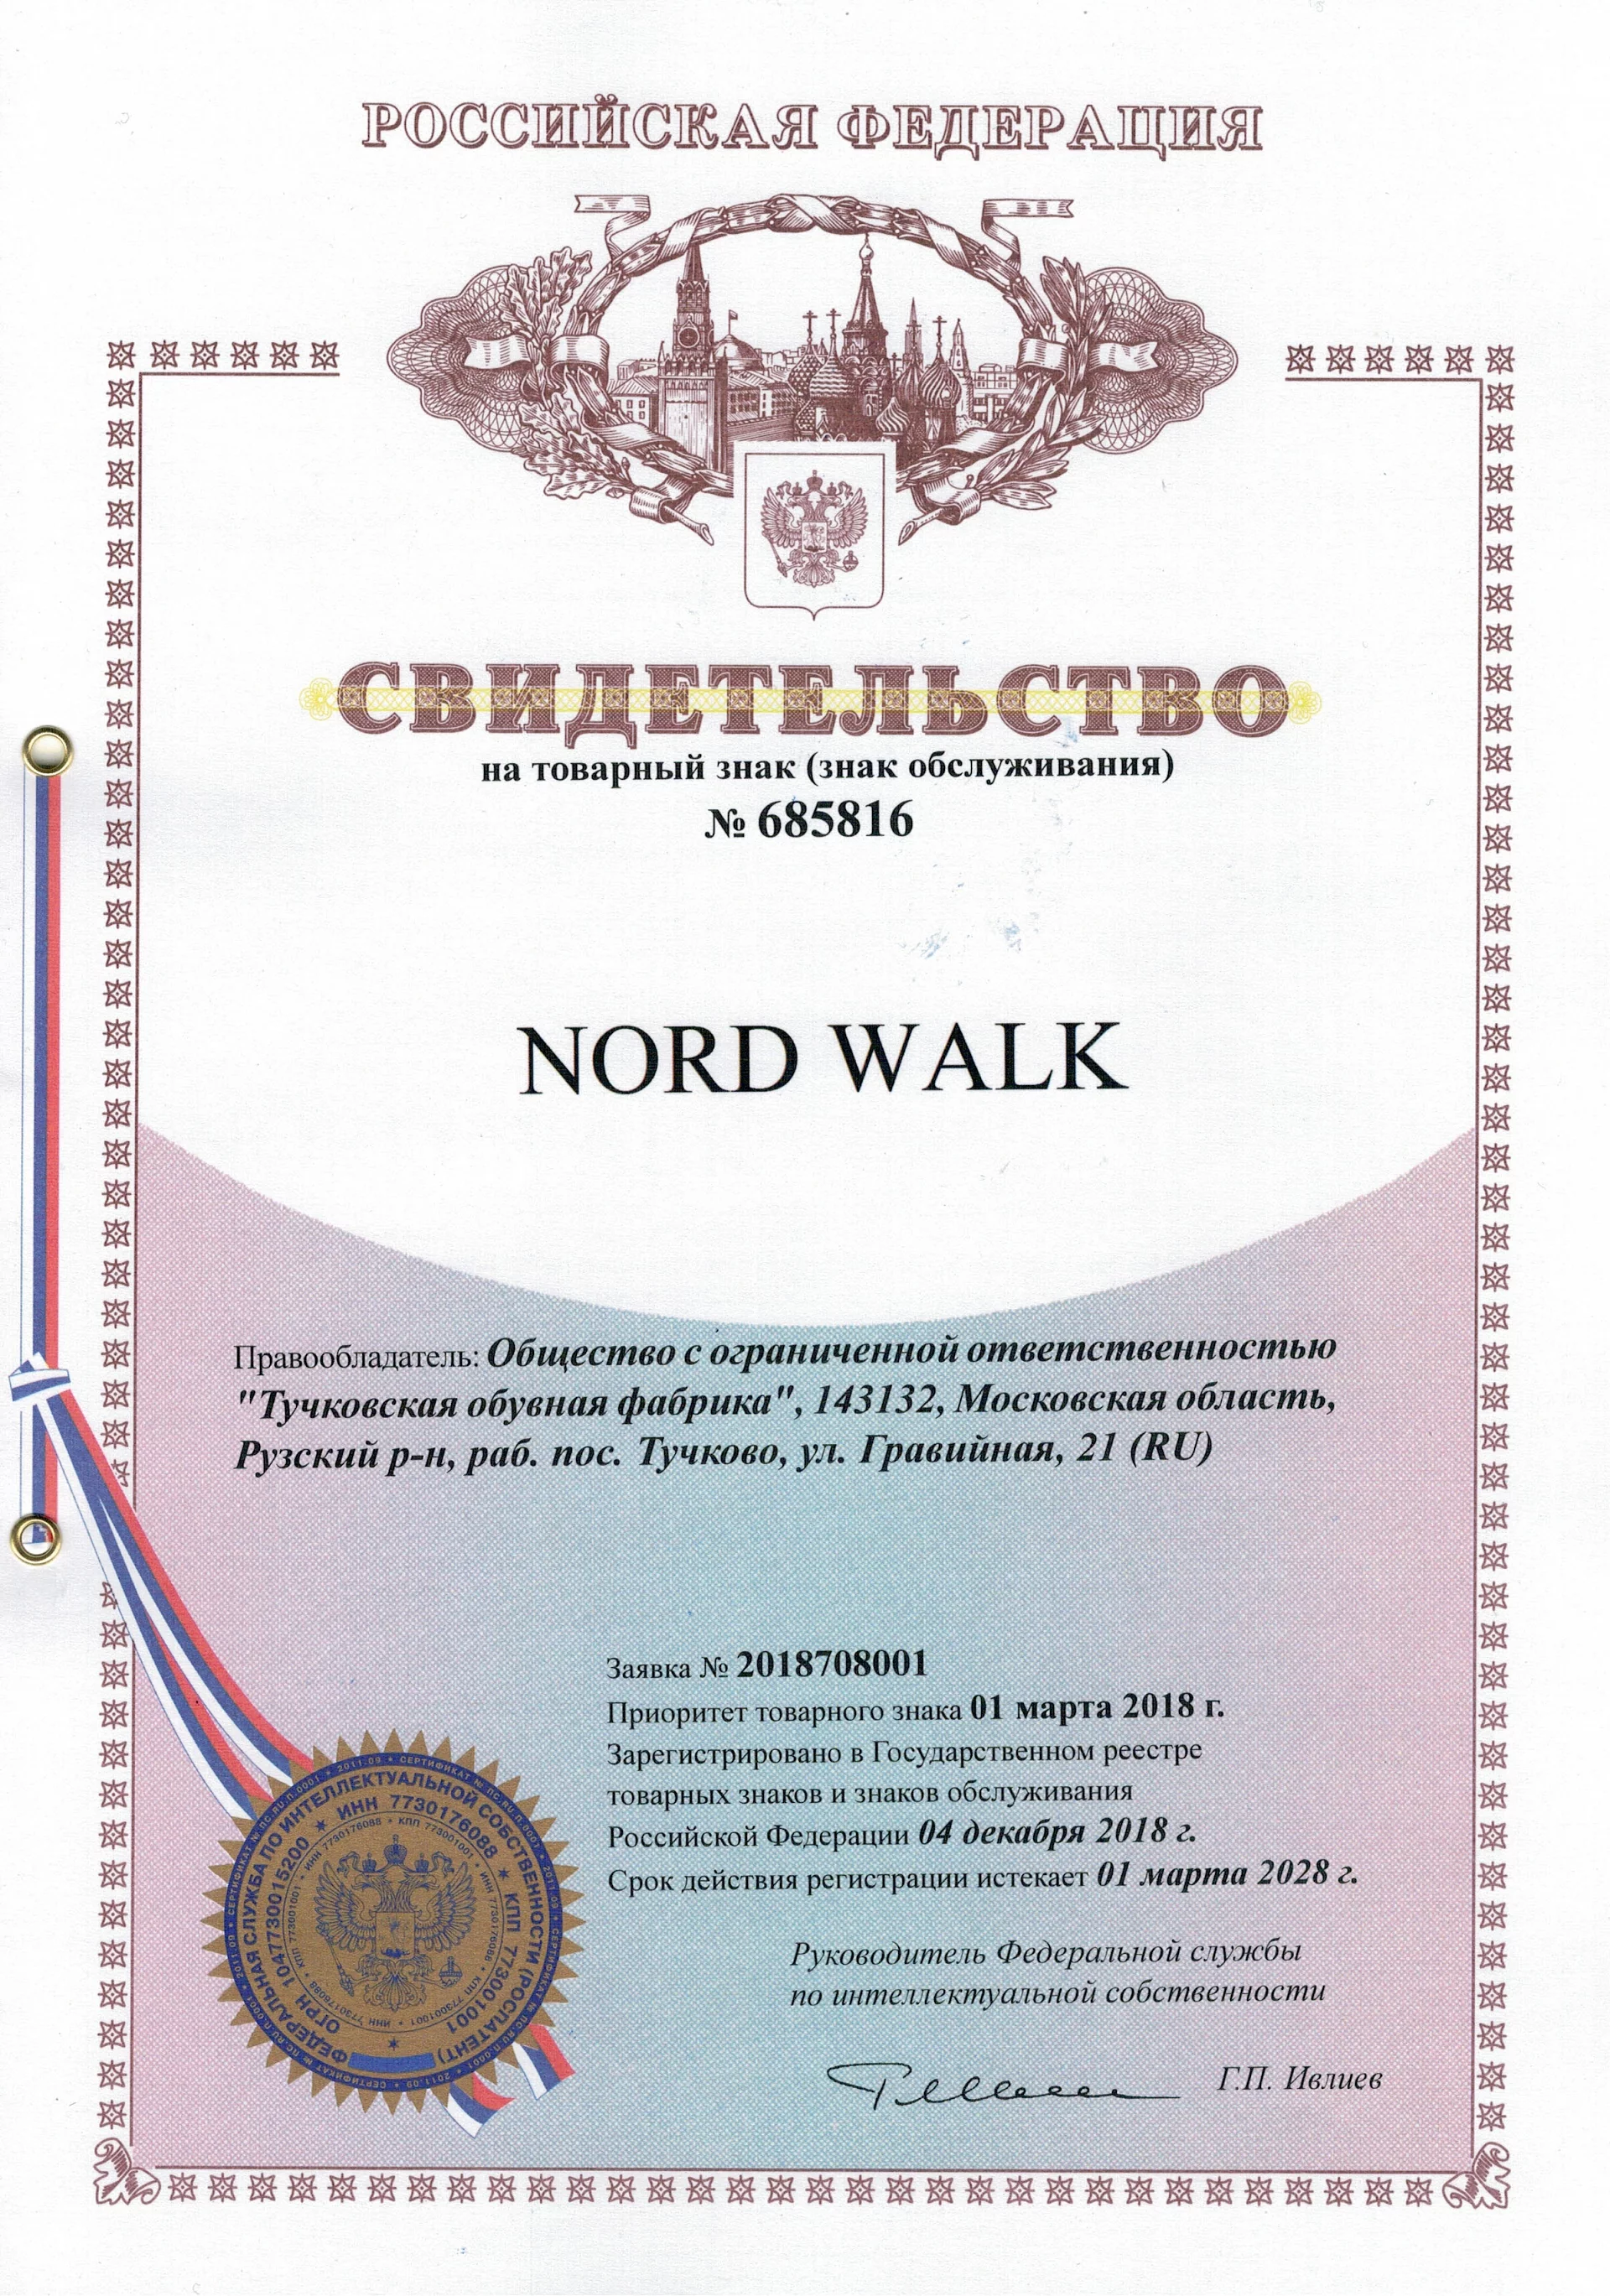 Товарный знак № 685816 – Nord walk